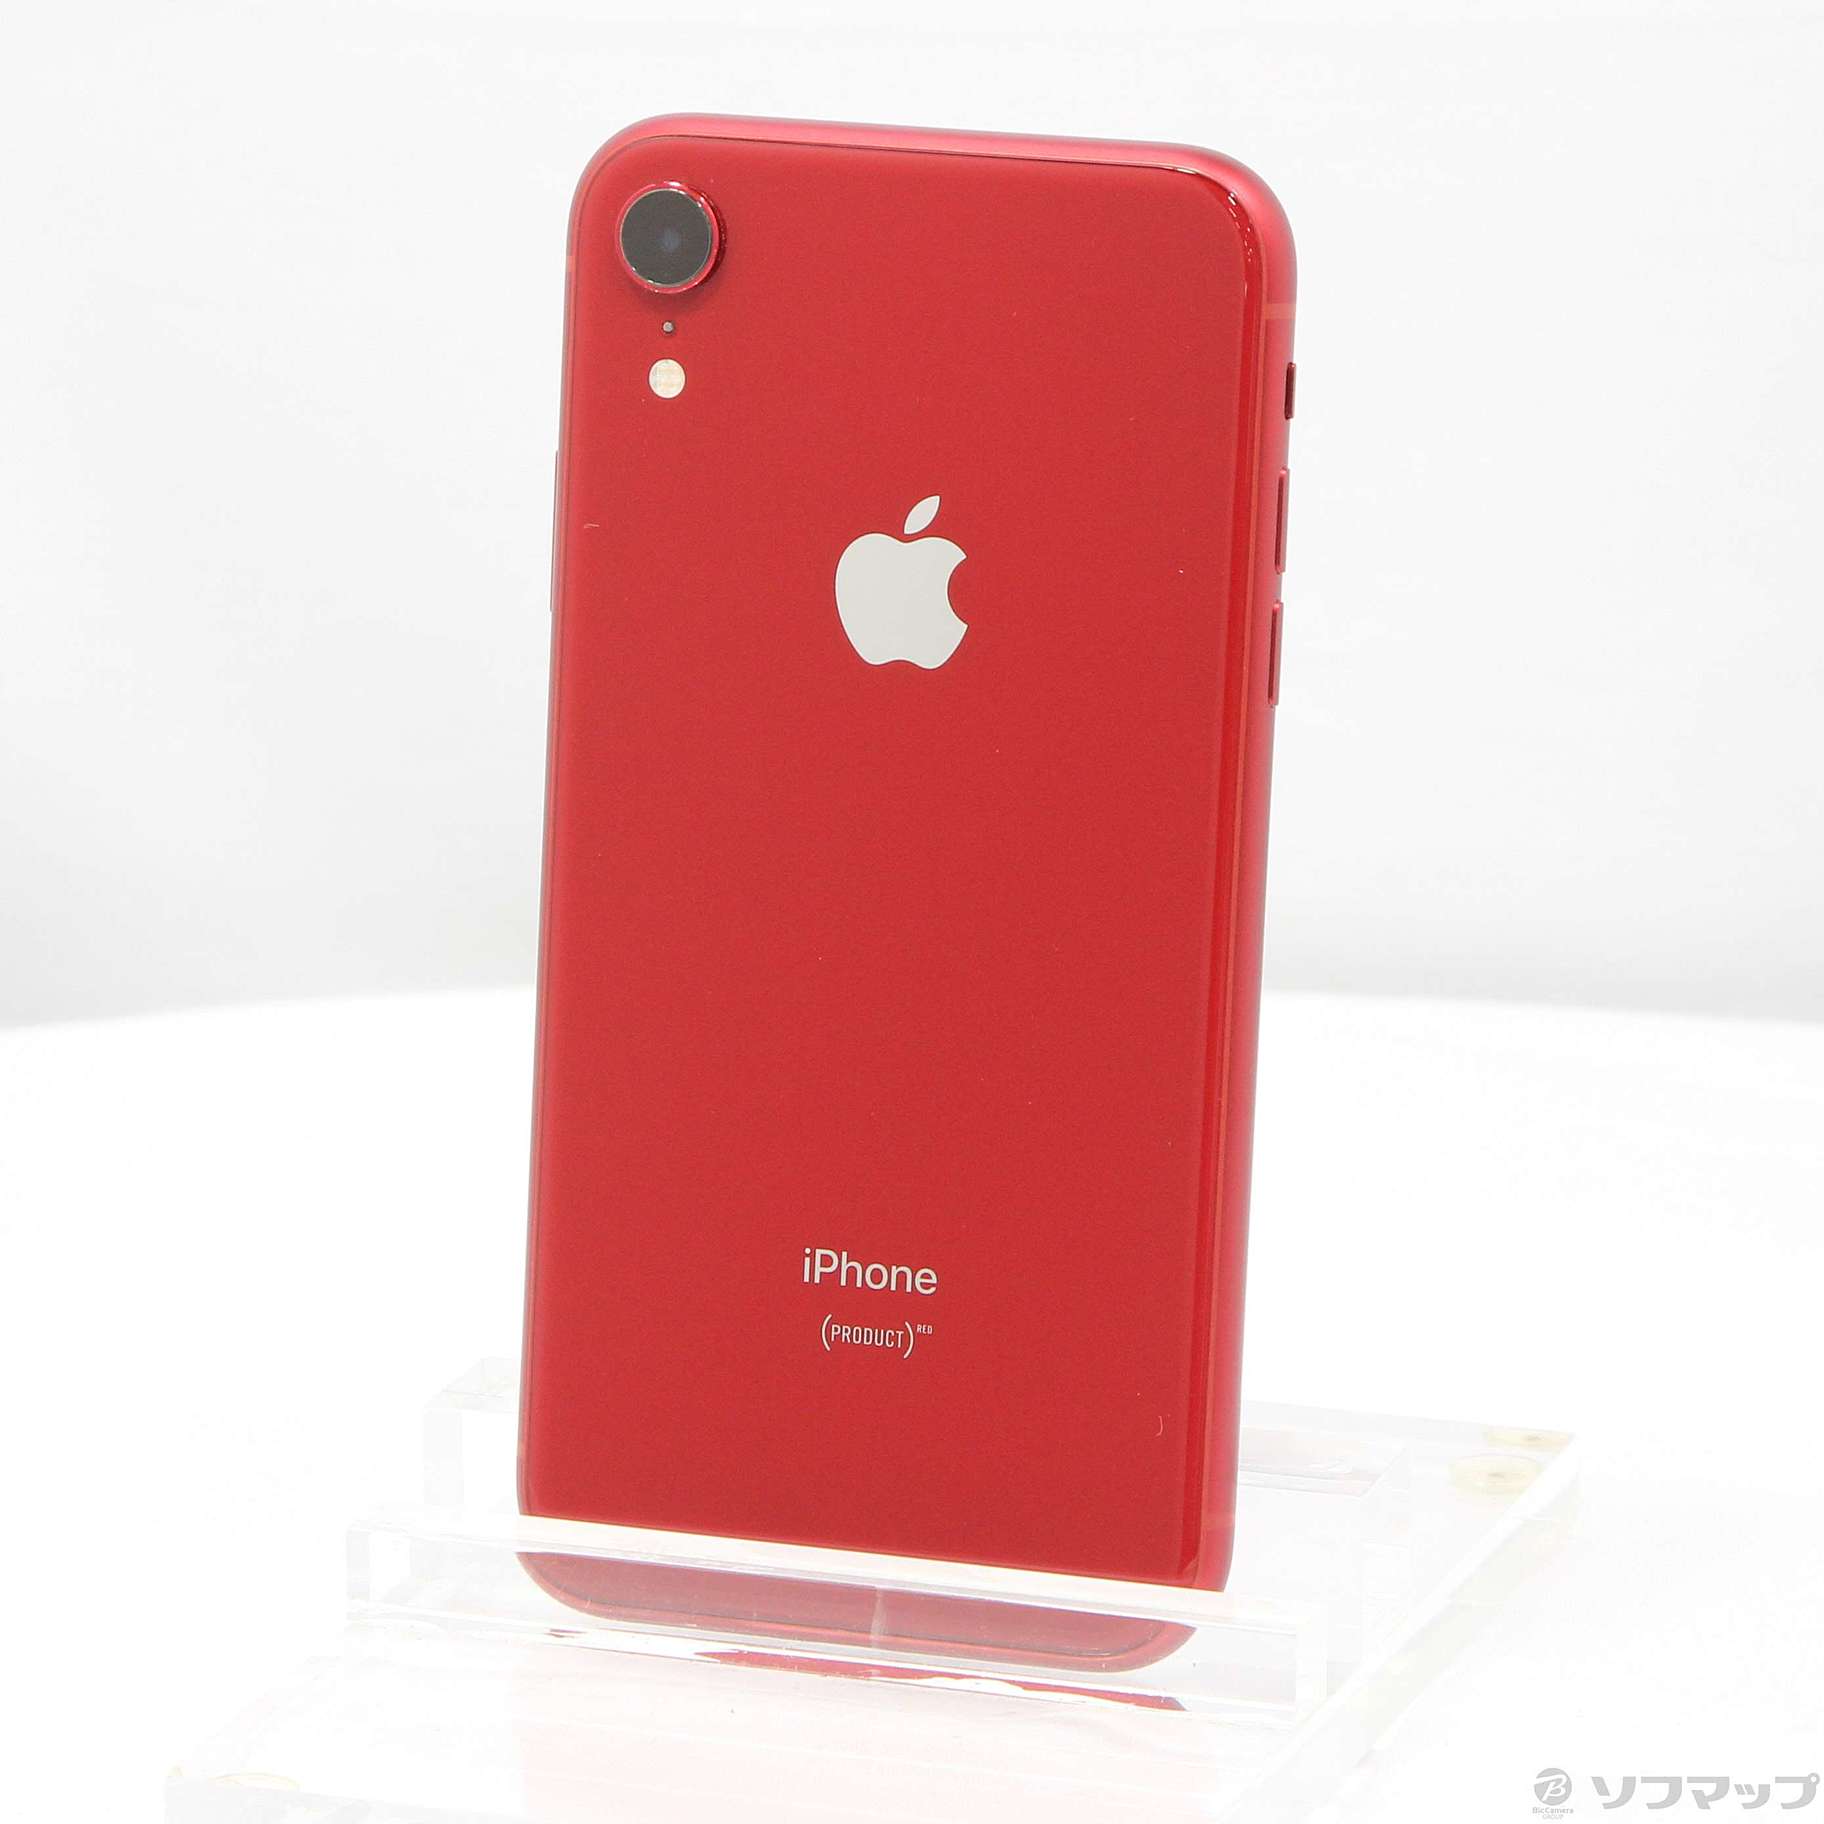 iphoneXR レッド 64GB SIMフリー - スマートフォン本体 - equipos 